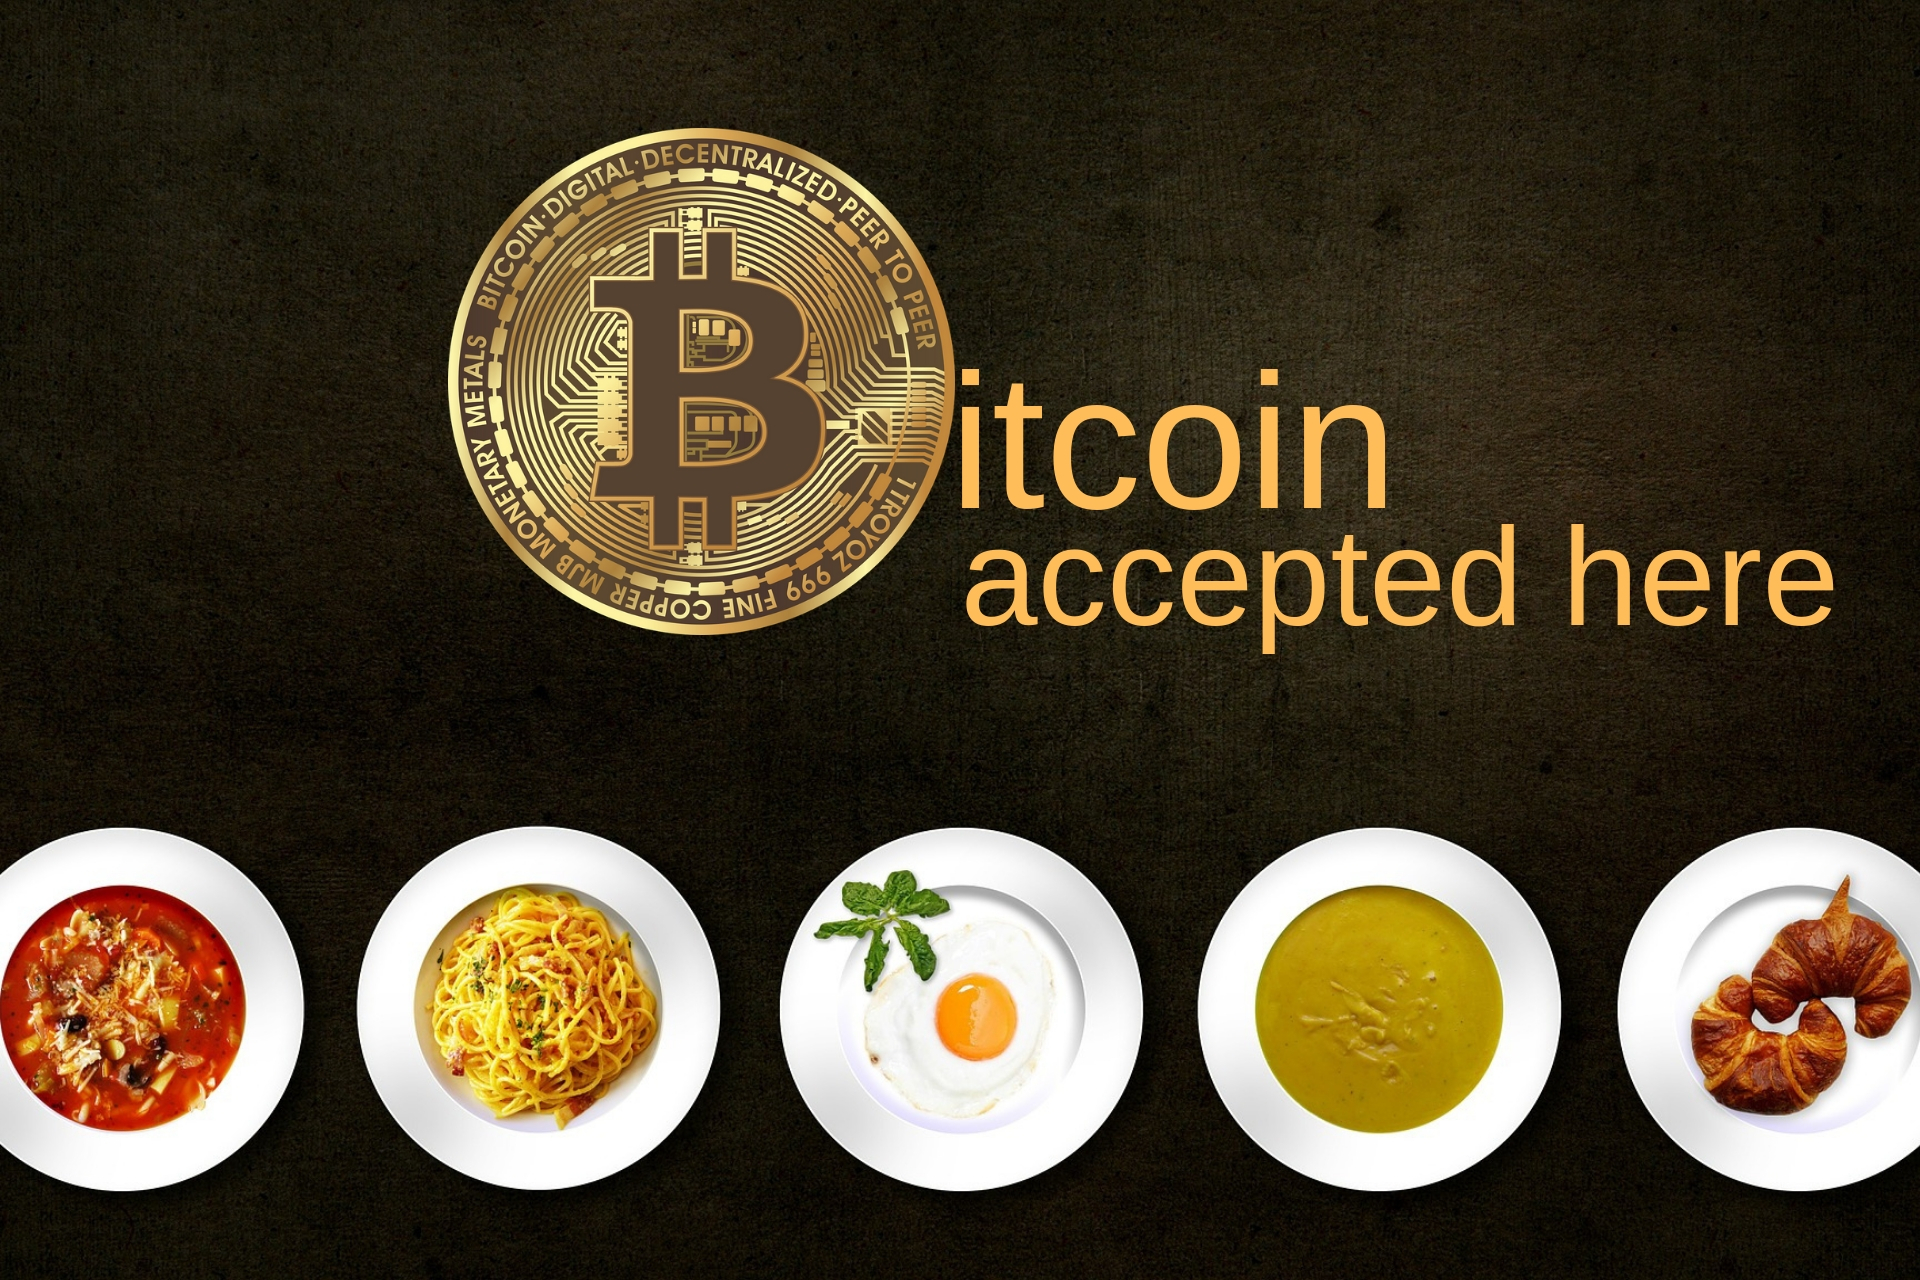 accepting bitcoin